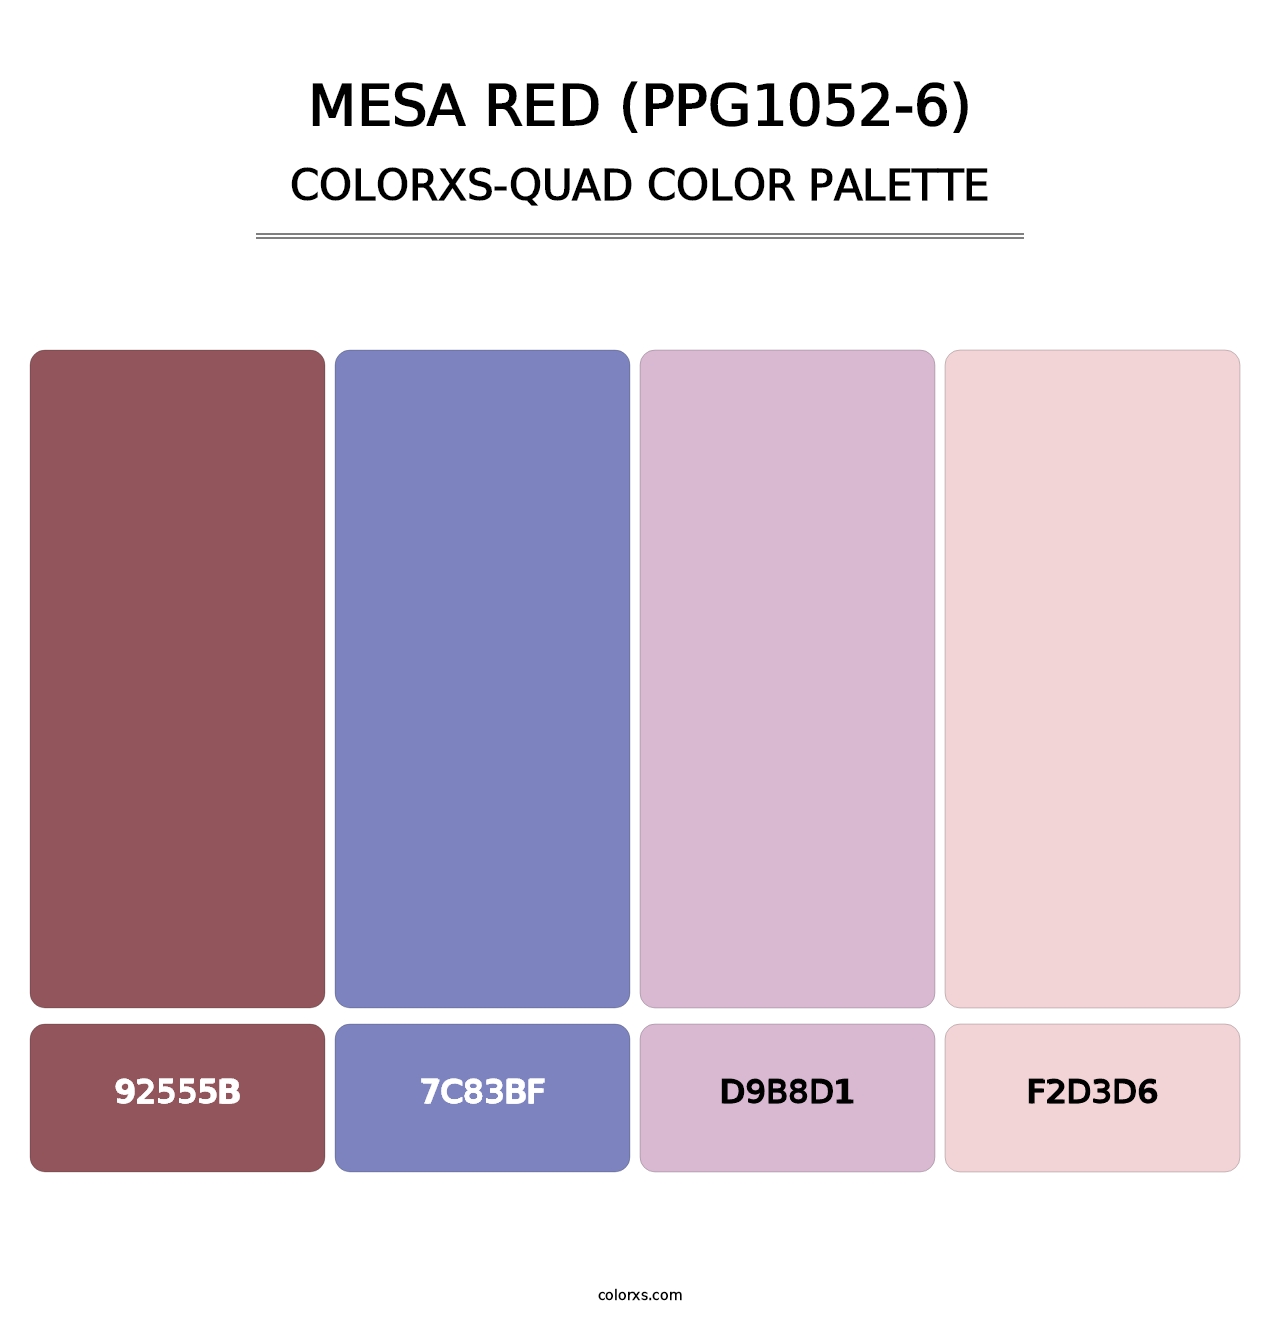 Mesa Red (PPG1052-6) - Colorxs Quad Palette